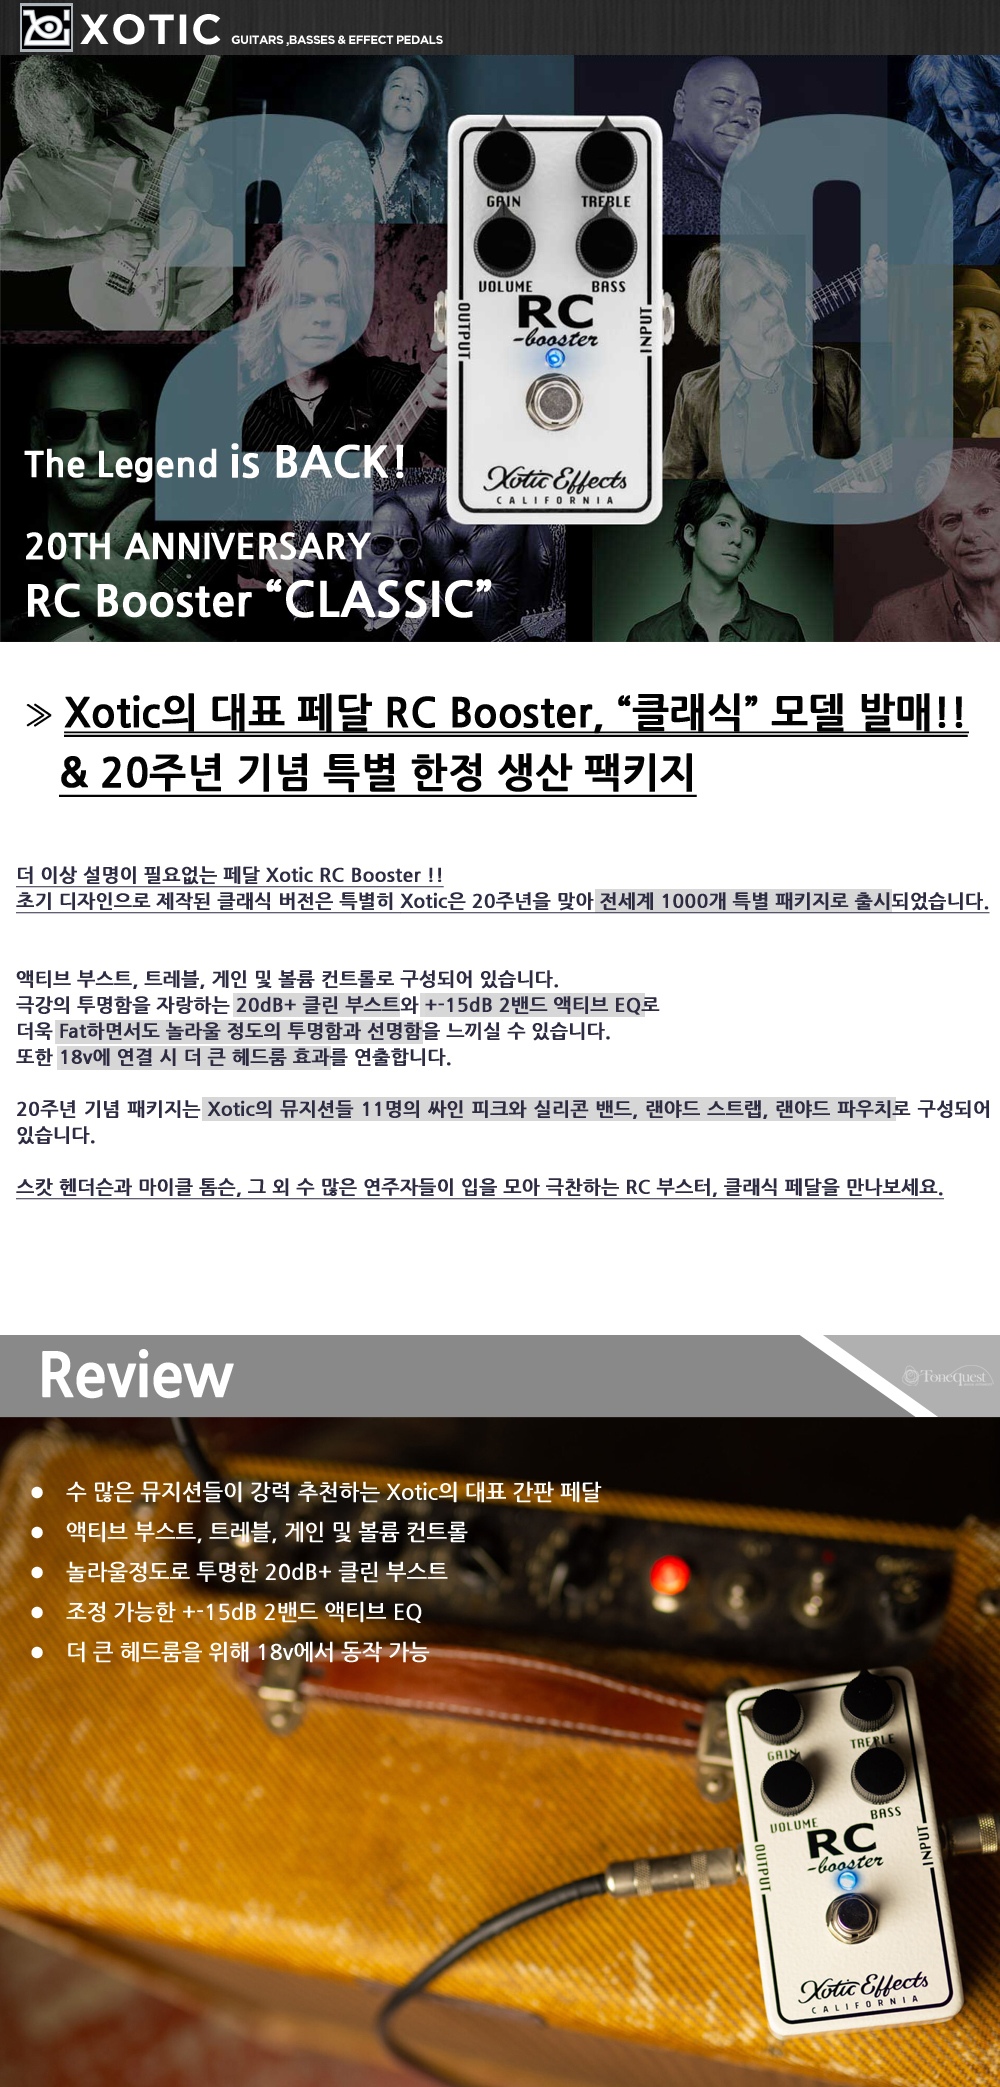 Xotic-RCBooster-Classic_1_170533.jpg